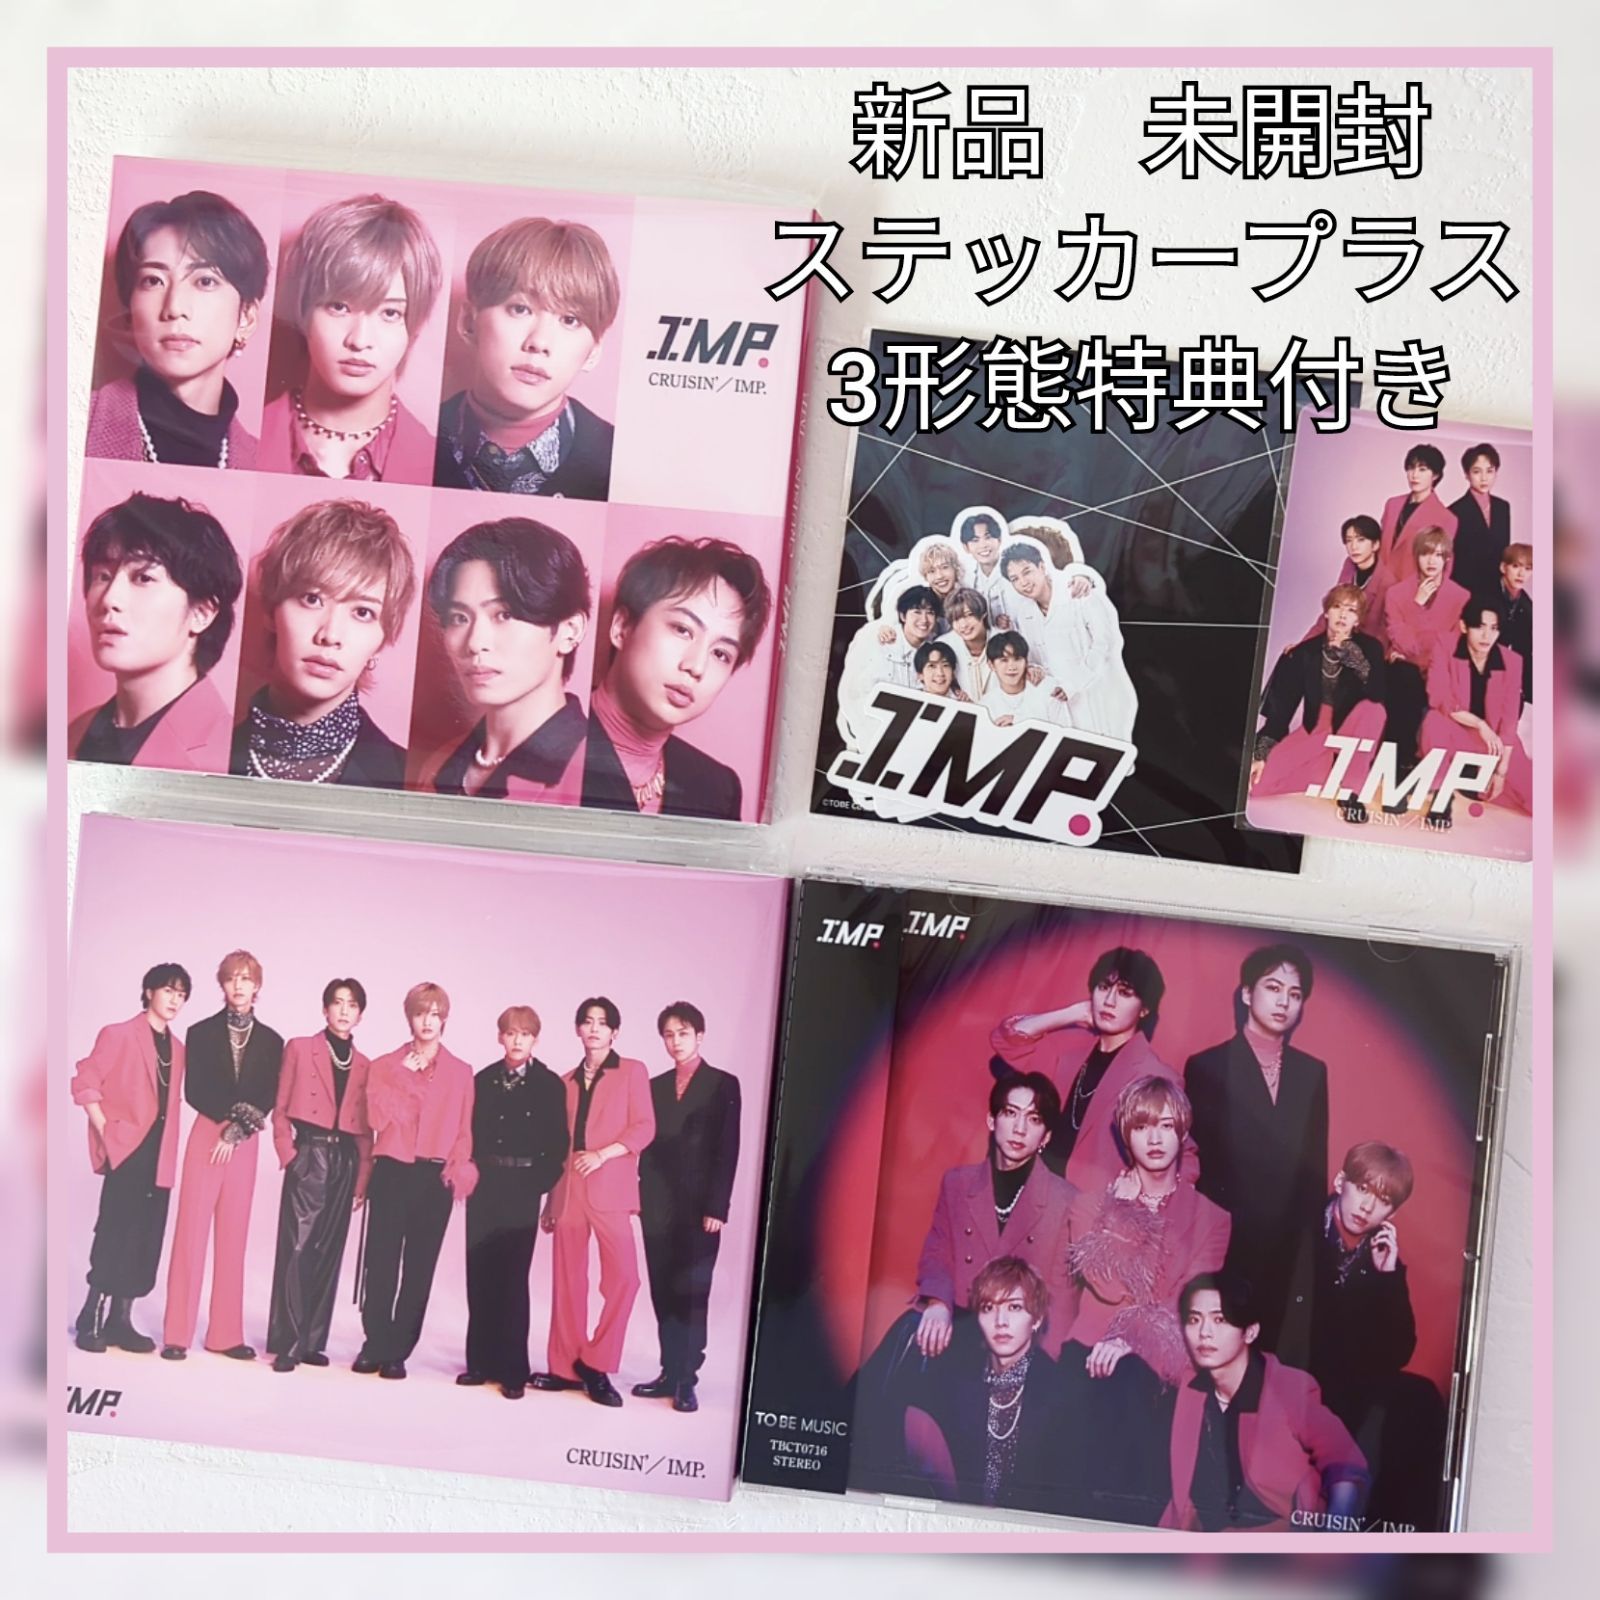 IMP. CRUISIN' CD 3形態 まとめ売り - 男性アイドル